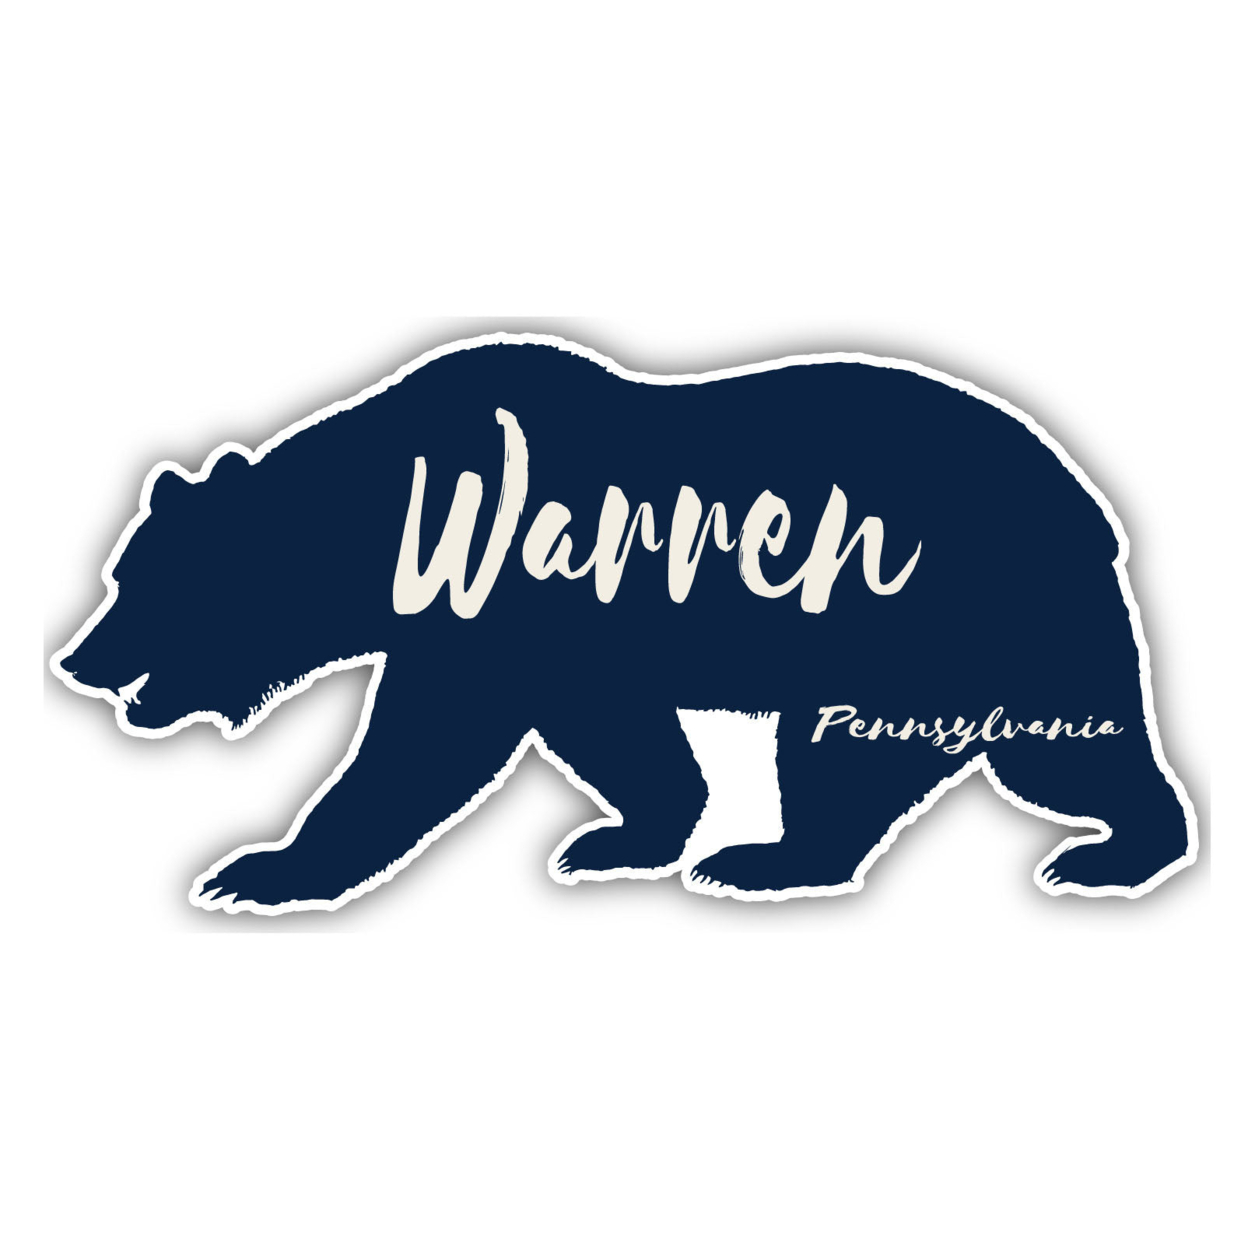 Warren Pennsylvania Souvenir Decorative Stickers (Choose Theme And Size) - Single Unit, 2-Inch, Bear